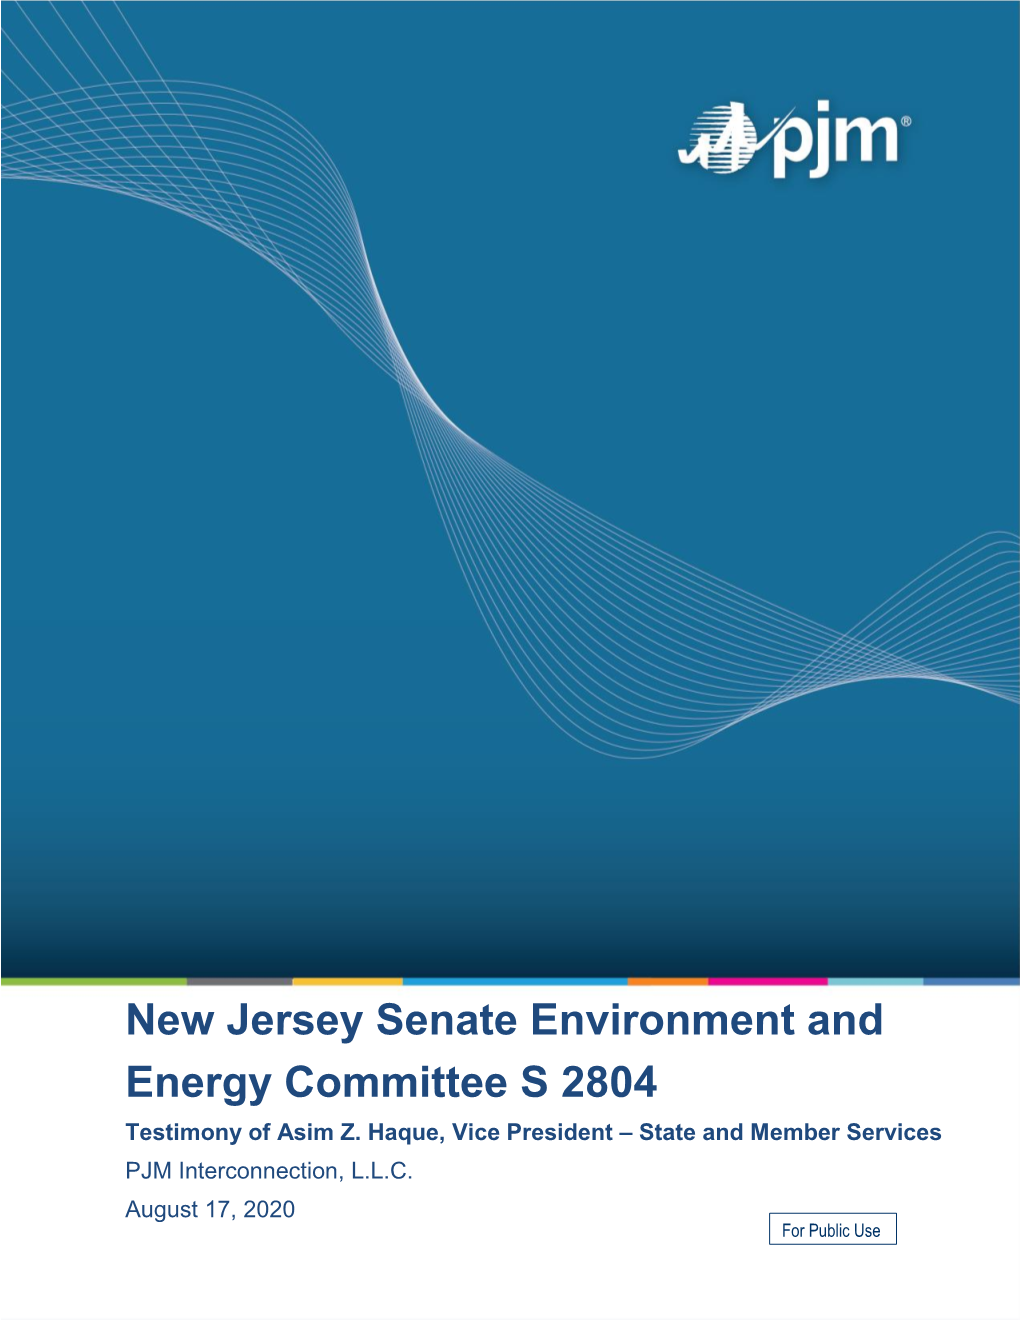 Testimony of Asim Z. Haque to the NJ Senate Environment and Energy